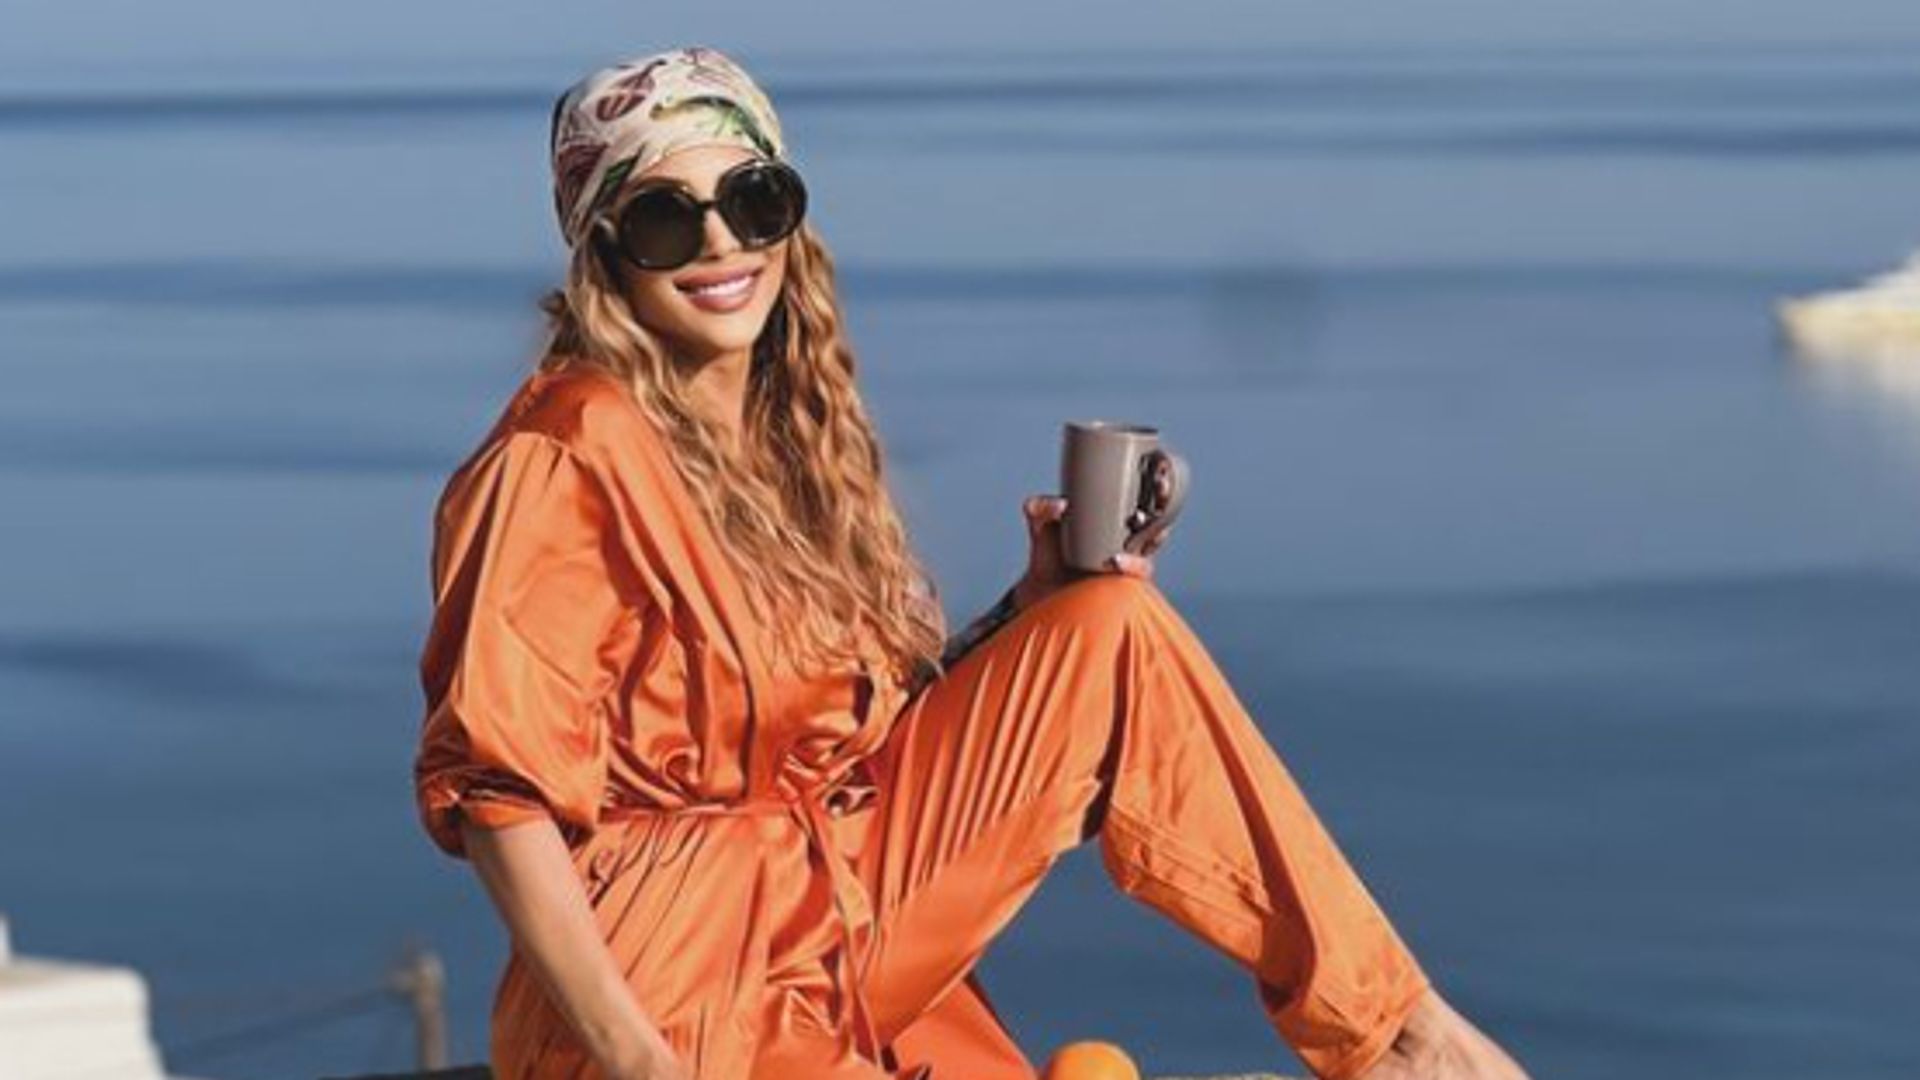 Farah El Kadhi in orange outfit posing on a building